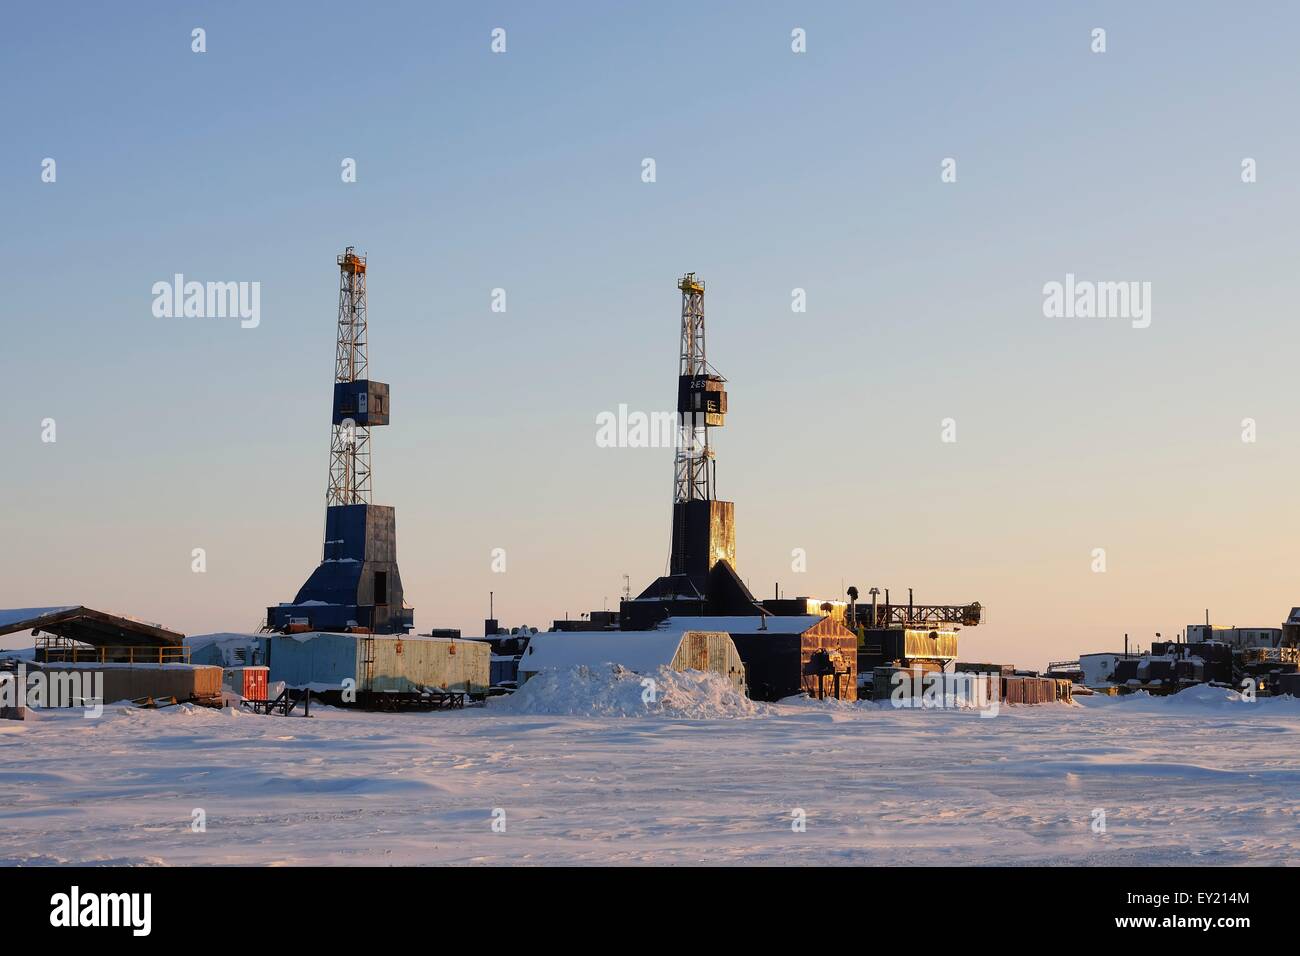 Oil derricks on the Prudhoe Bay oil field, Prudhoe Bay, Alaska, USA Stock Photo